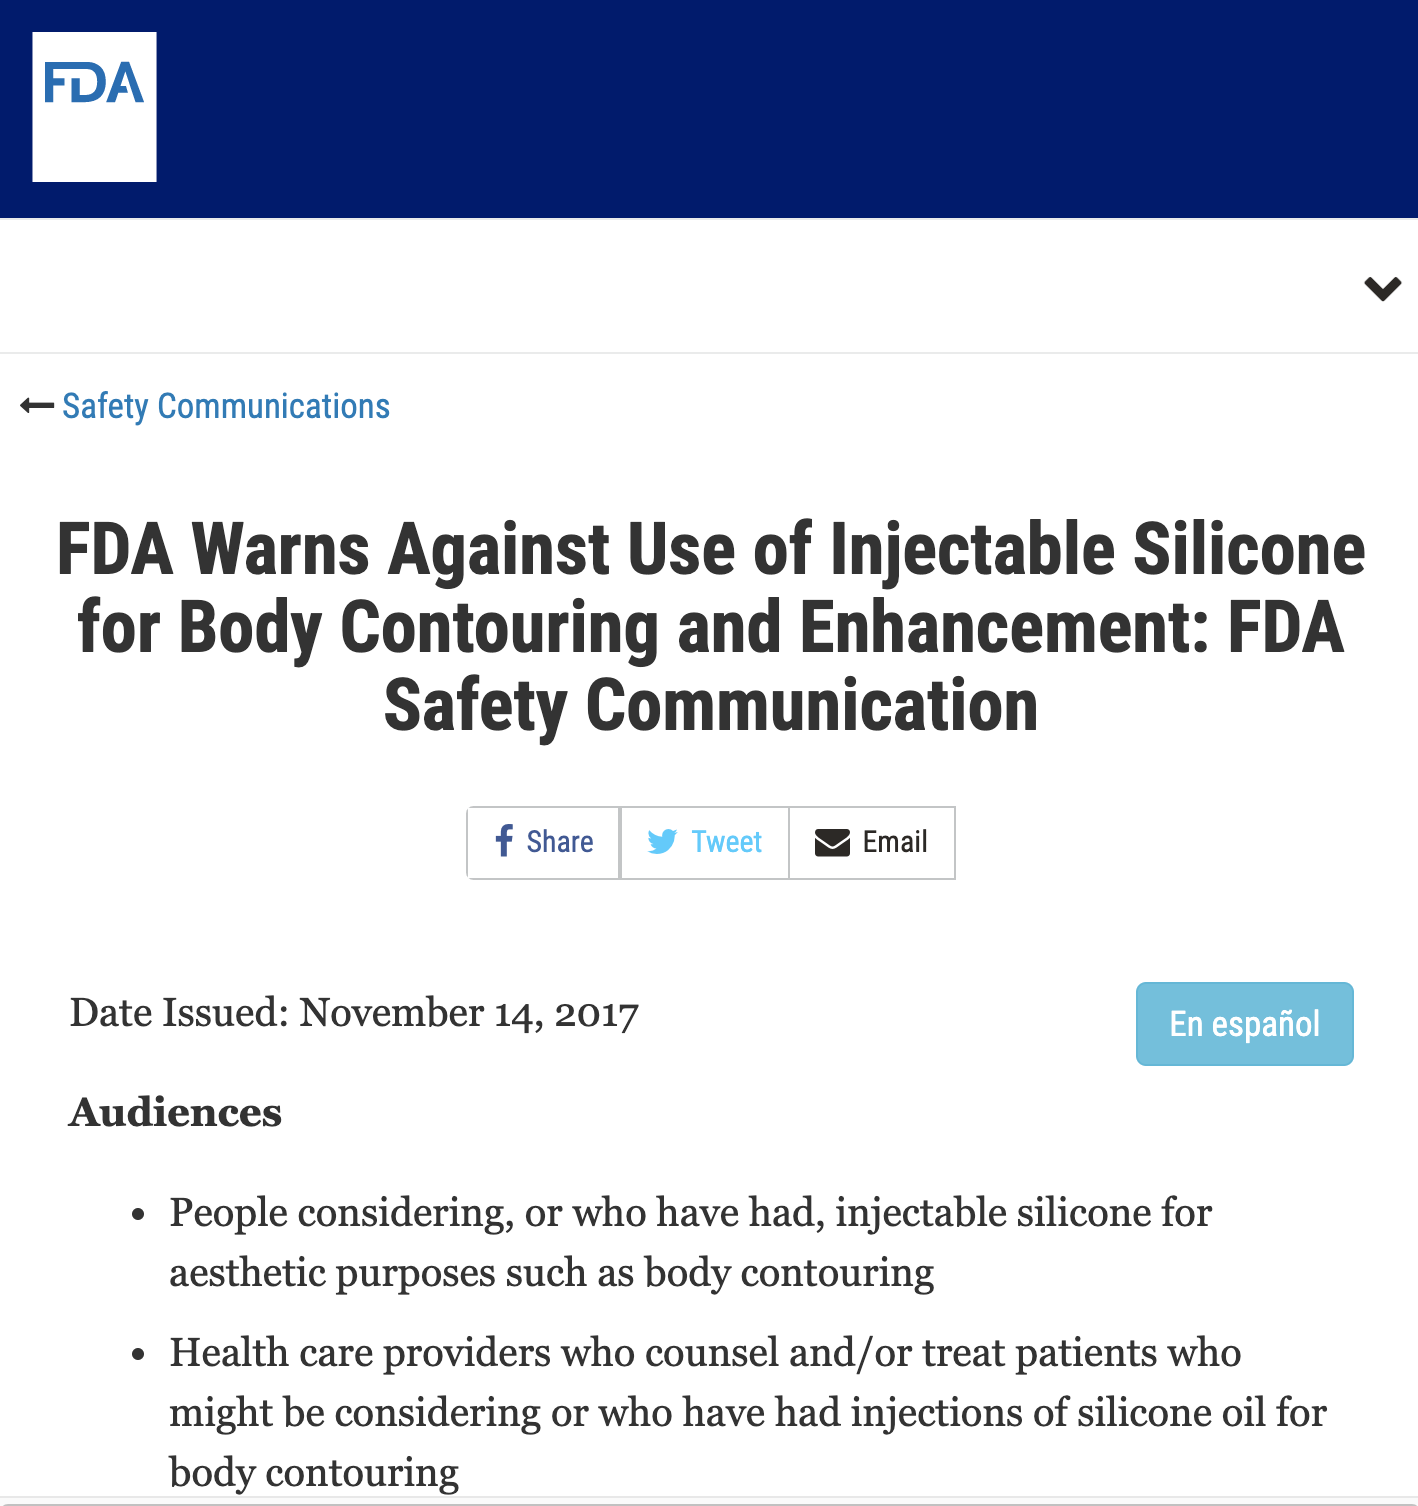 Screenshot of an FDA page